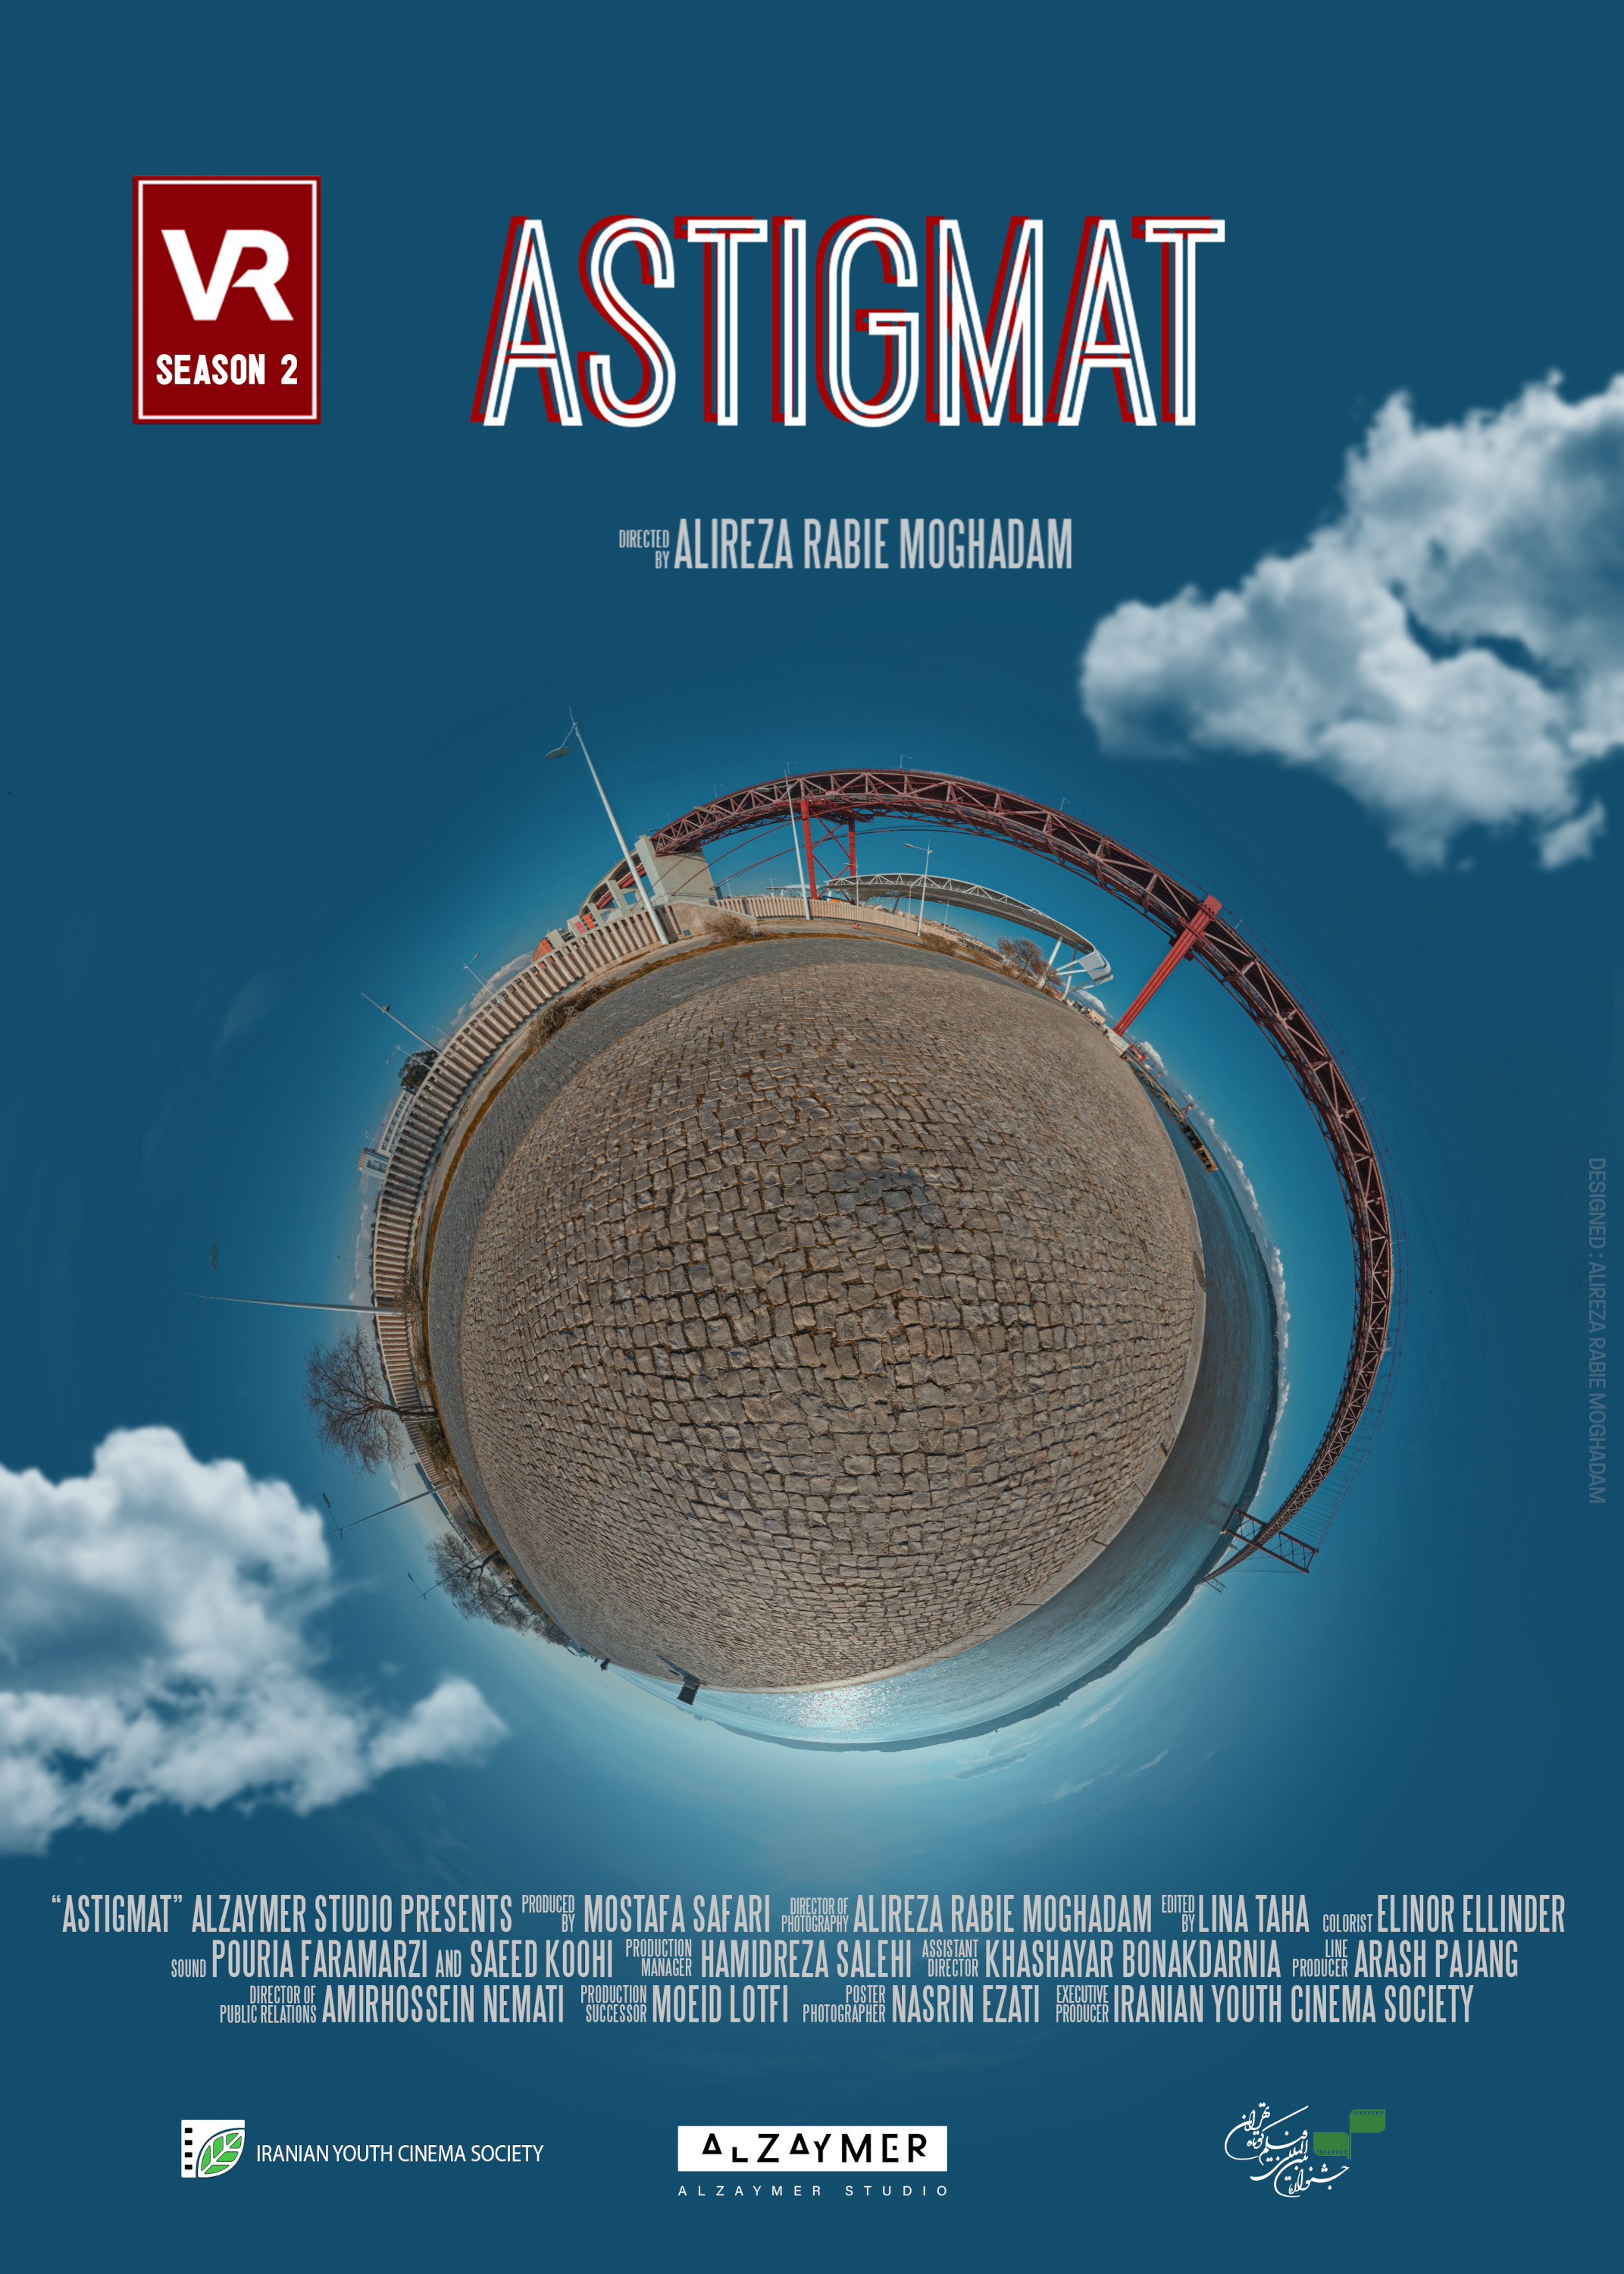 Mega Sized TV Poster Image for Astigmat (#2 of 3)